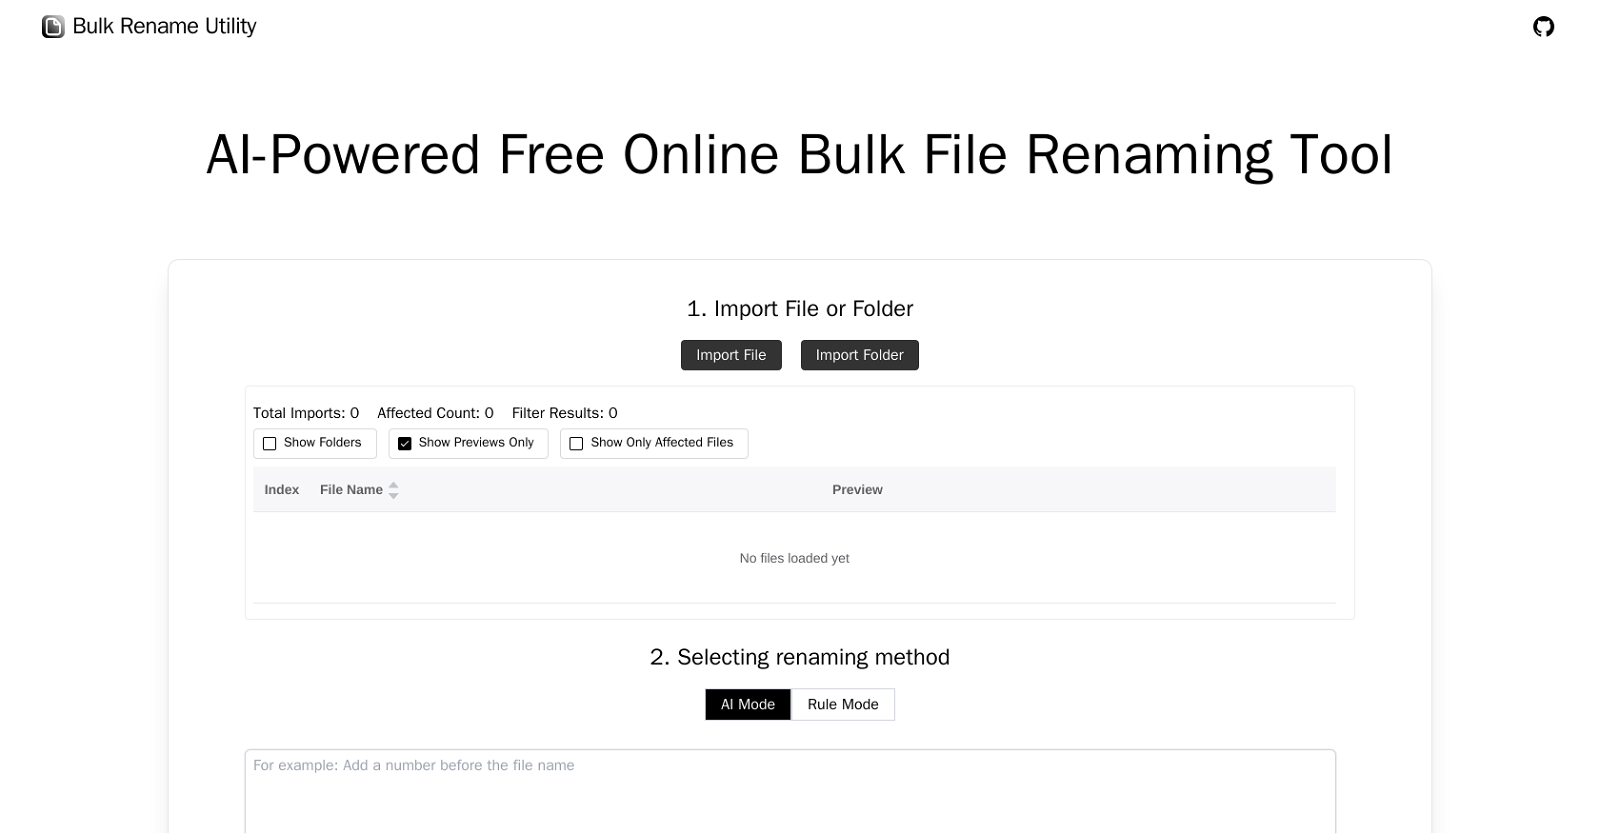 Bulk Rename Utility website